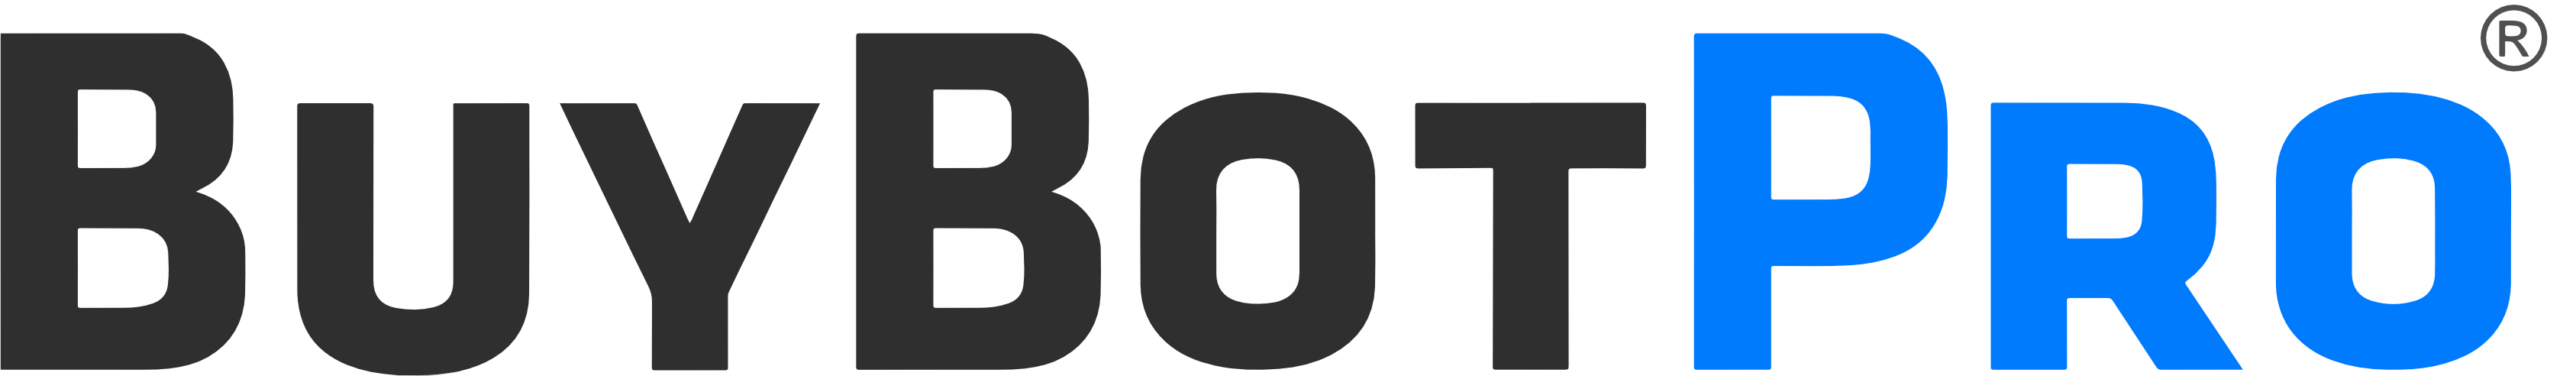 Instant Buy Bot Logo